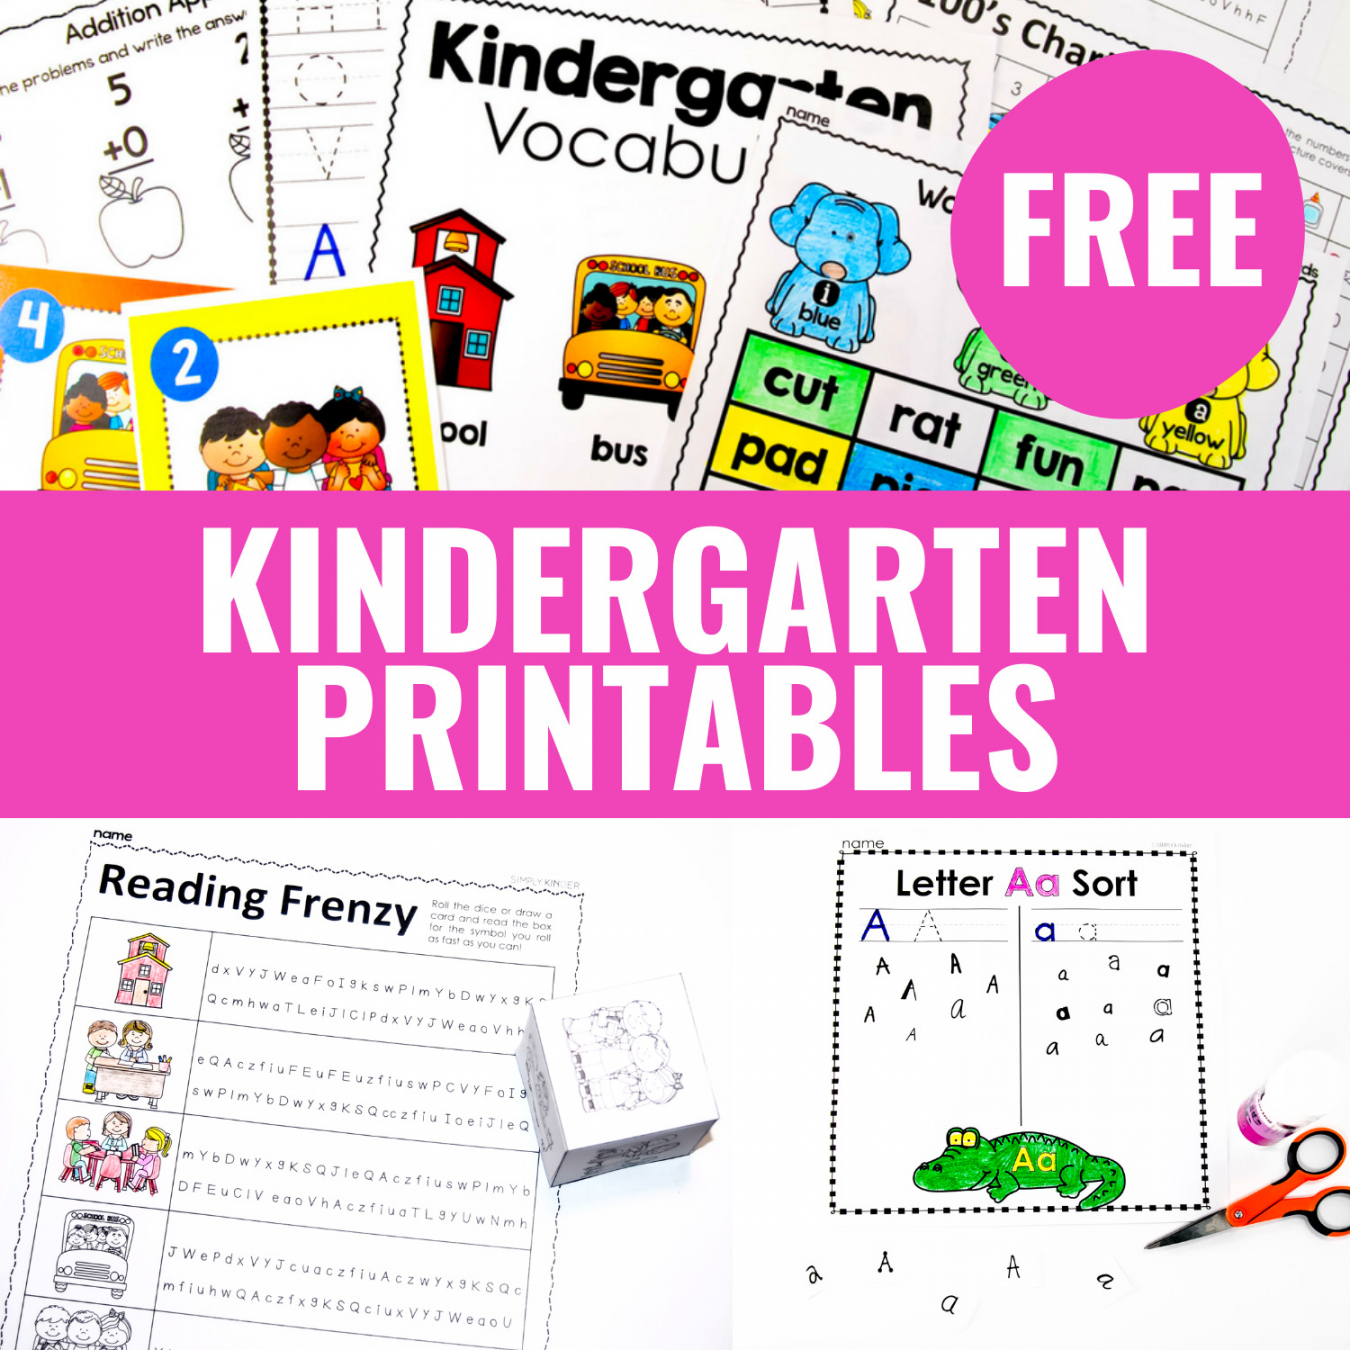 Free Kindergarten Activities and Worksheets - Simply Kinder